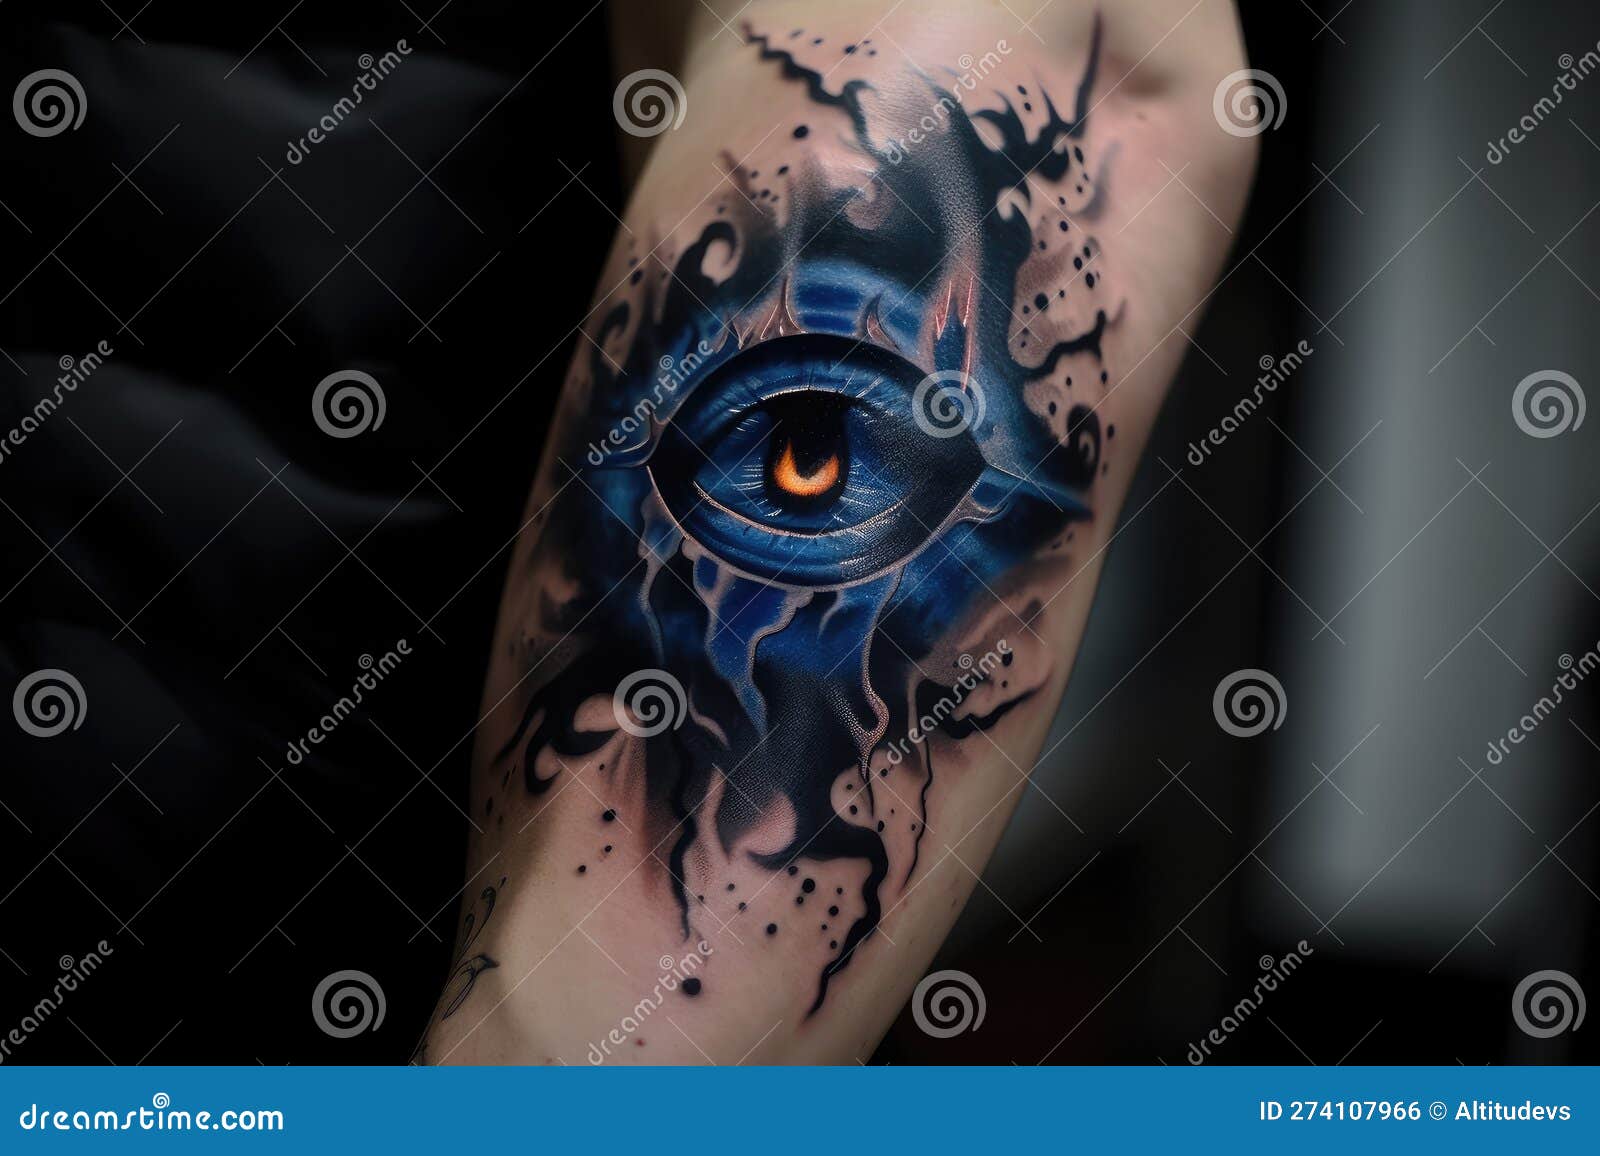 Eye Tattoo with Cross Design